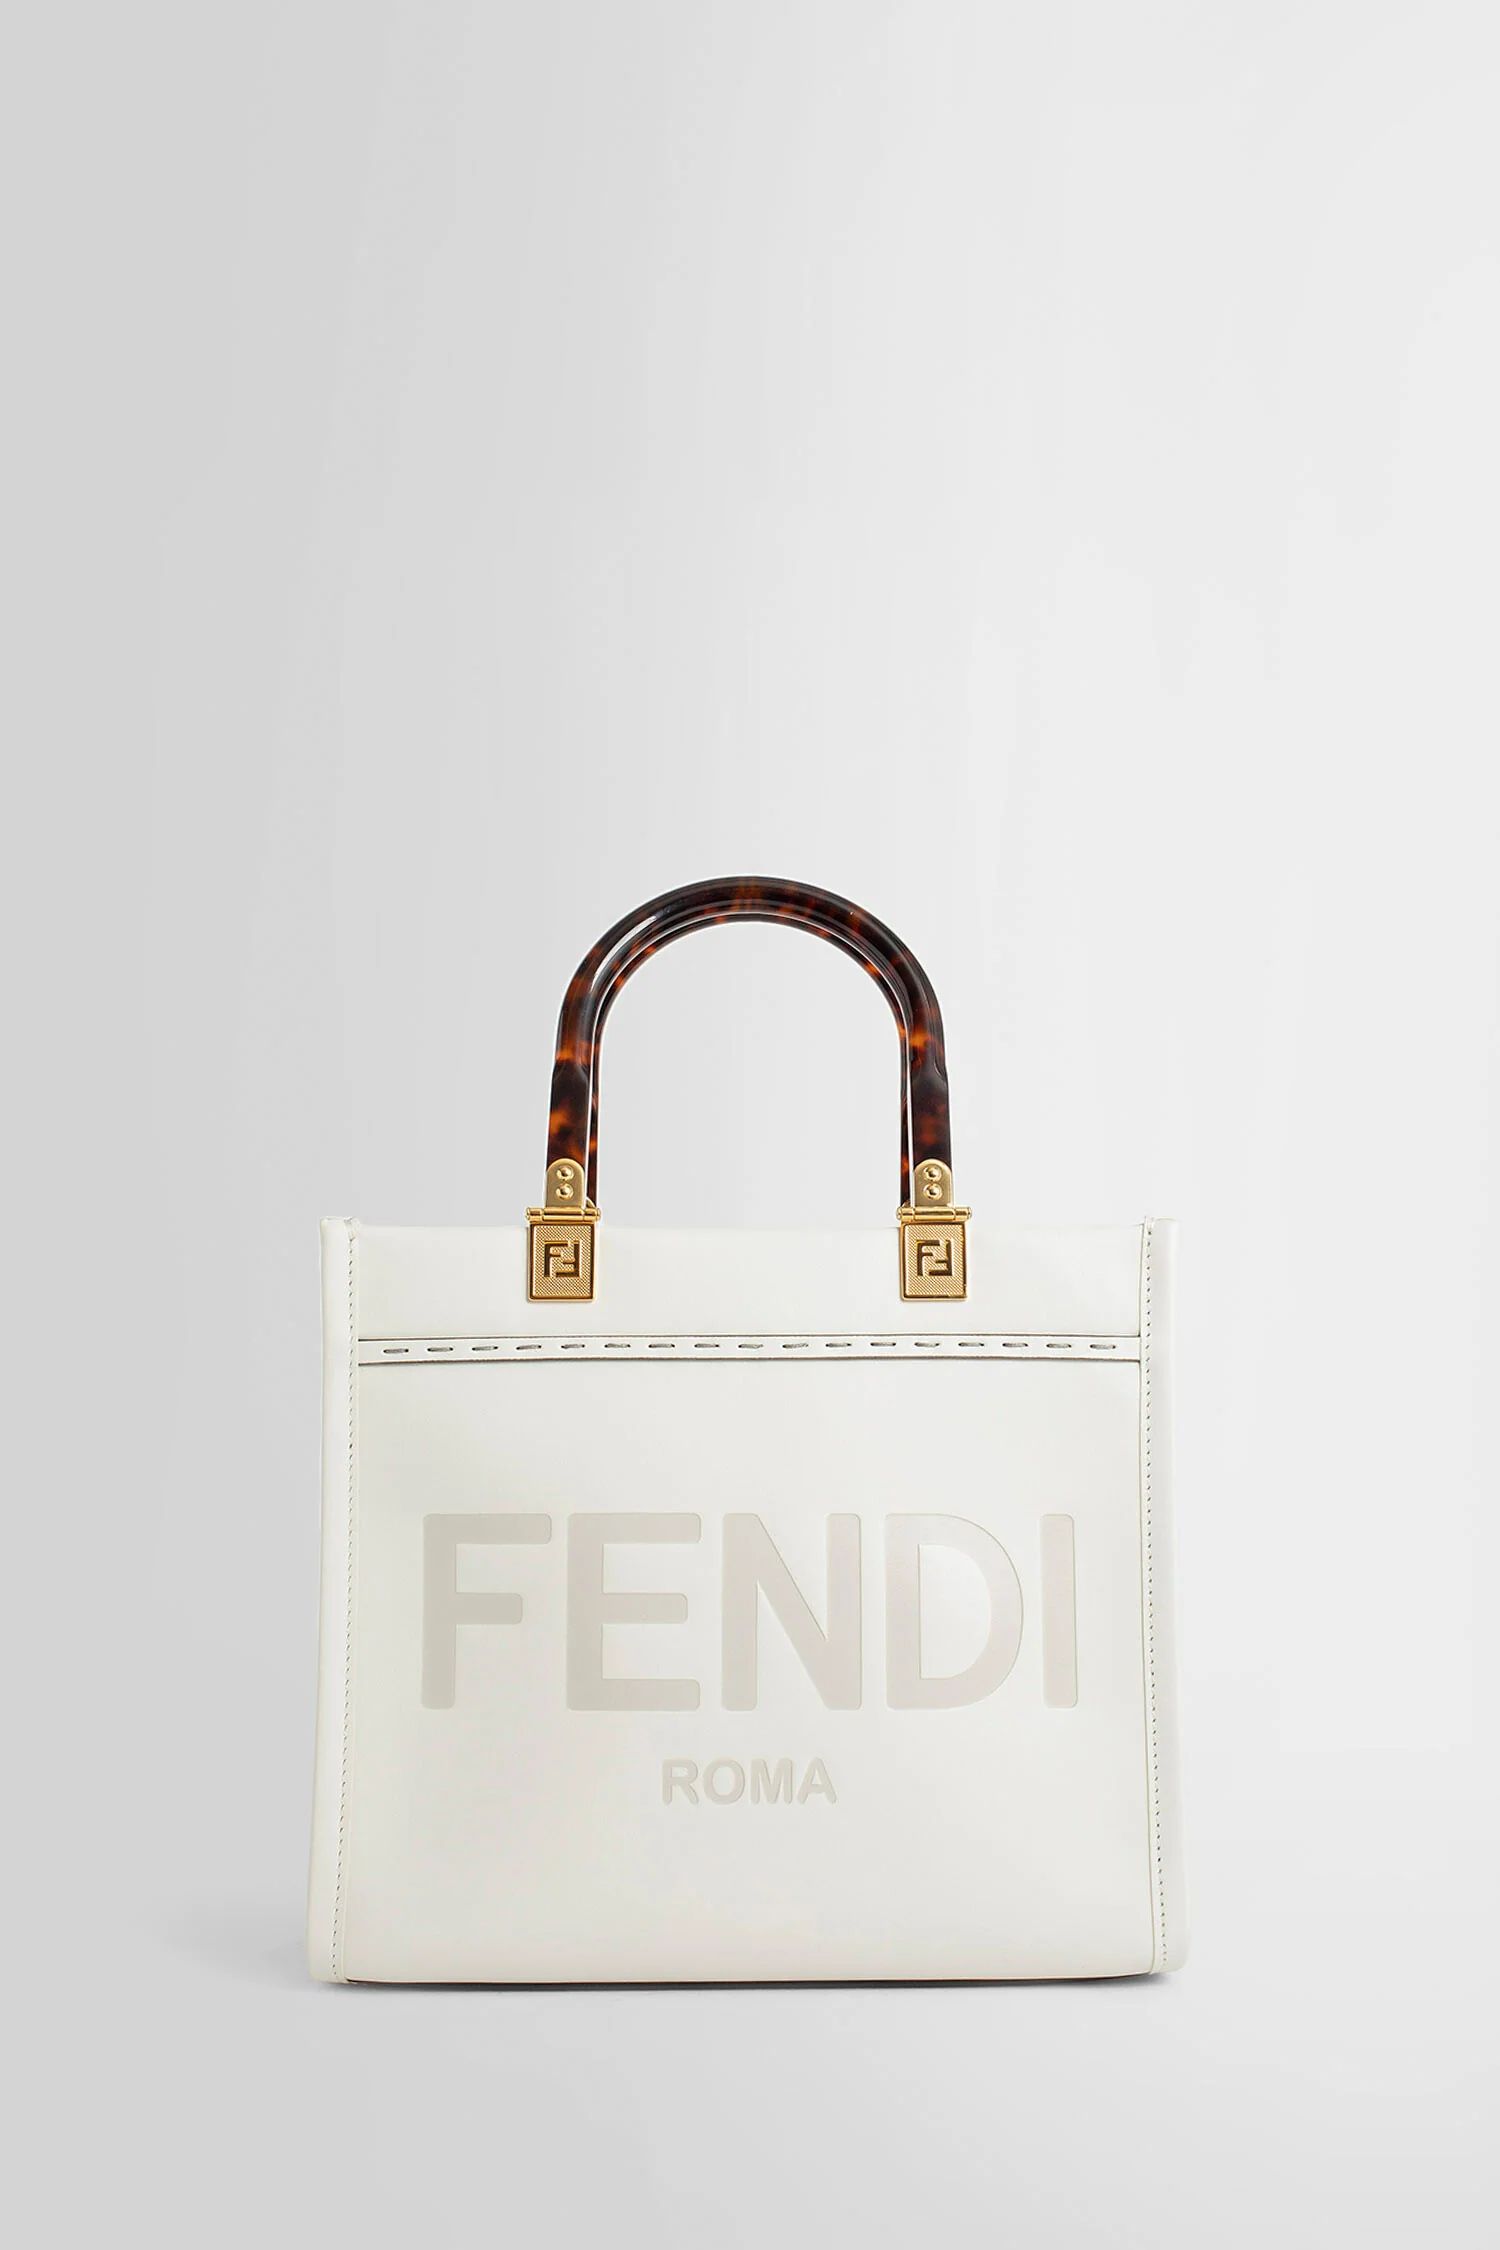 FENDI WOMAN WHITE TOTE BAGS | Antonioli